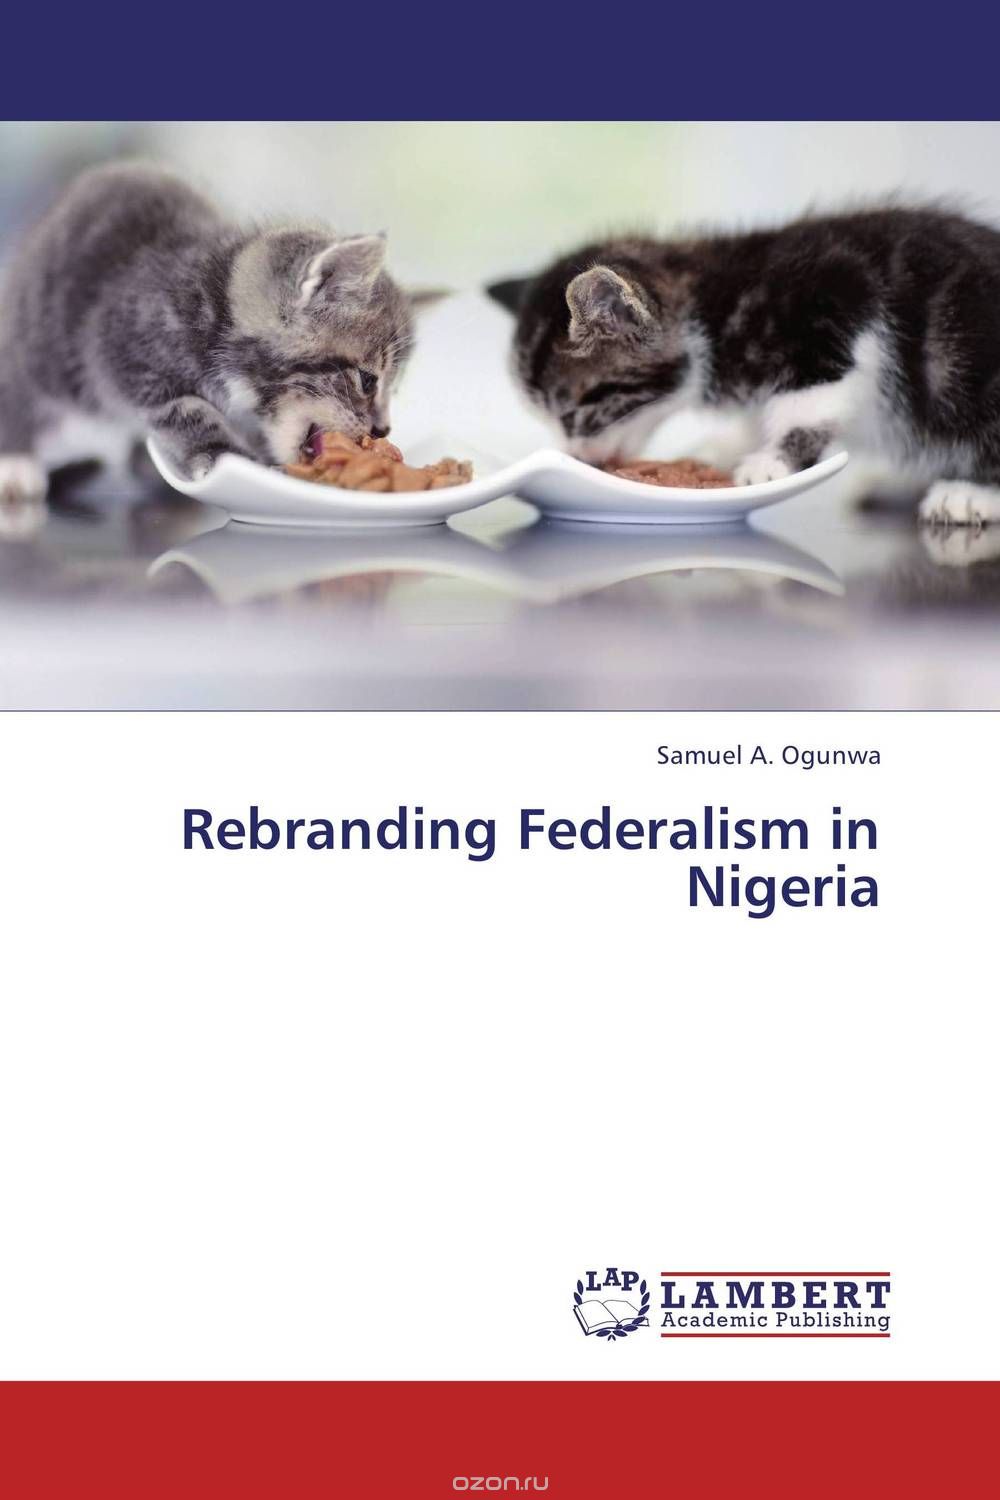 Скачать книгу "Rebranding Federalism in Nigeria"